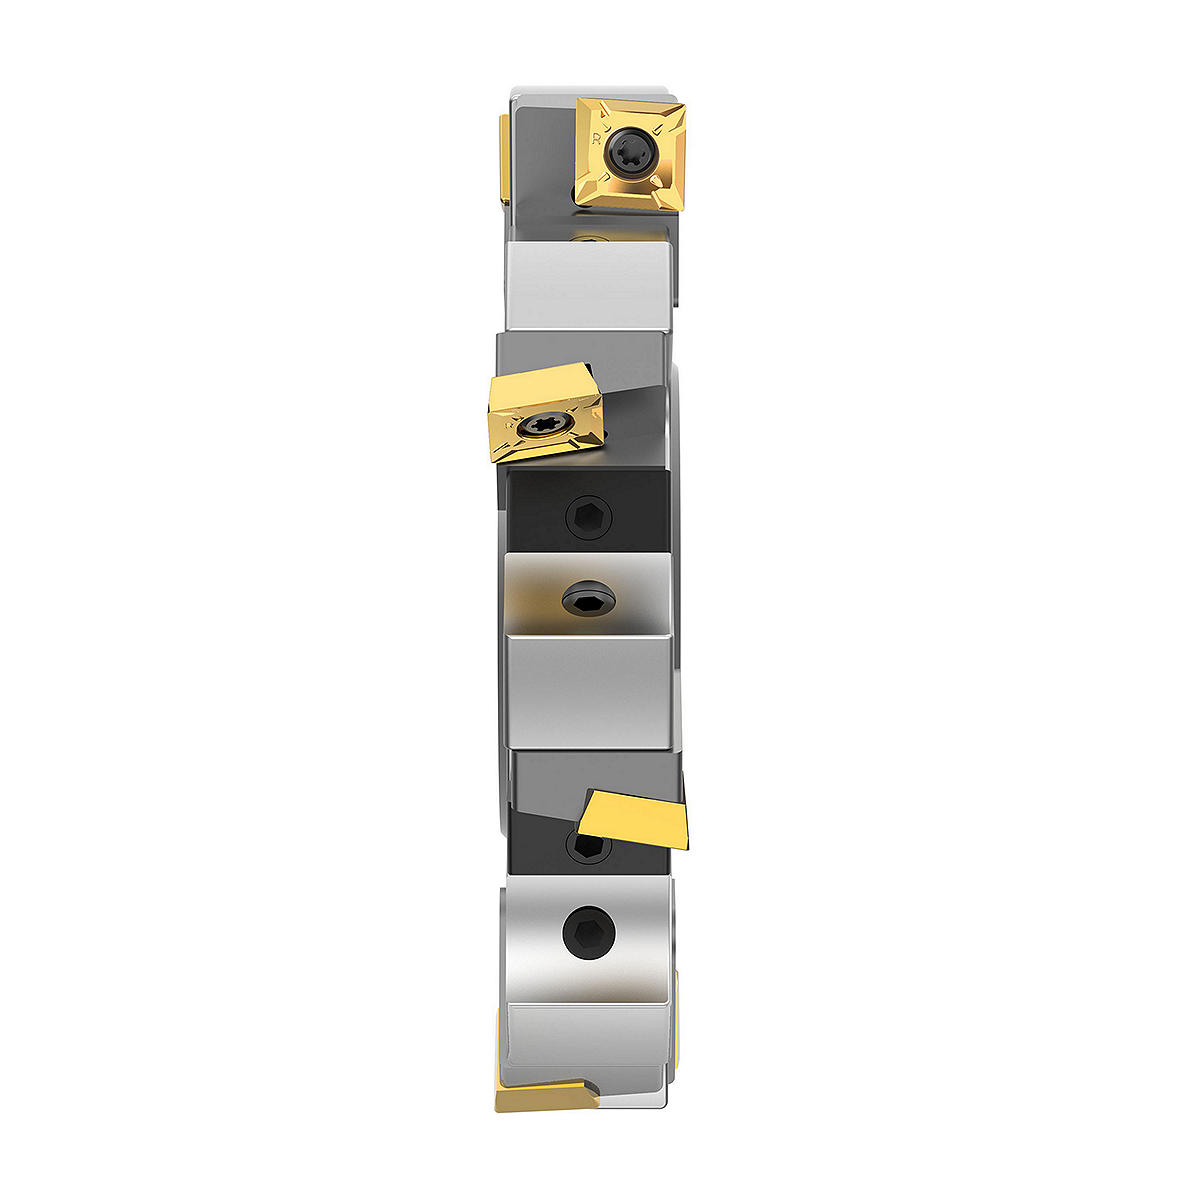 Slot milling cutter for full slot milling in multiple materials